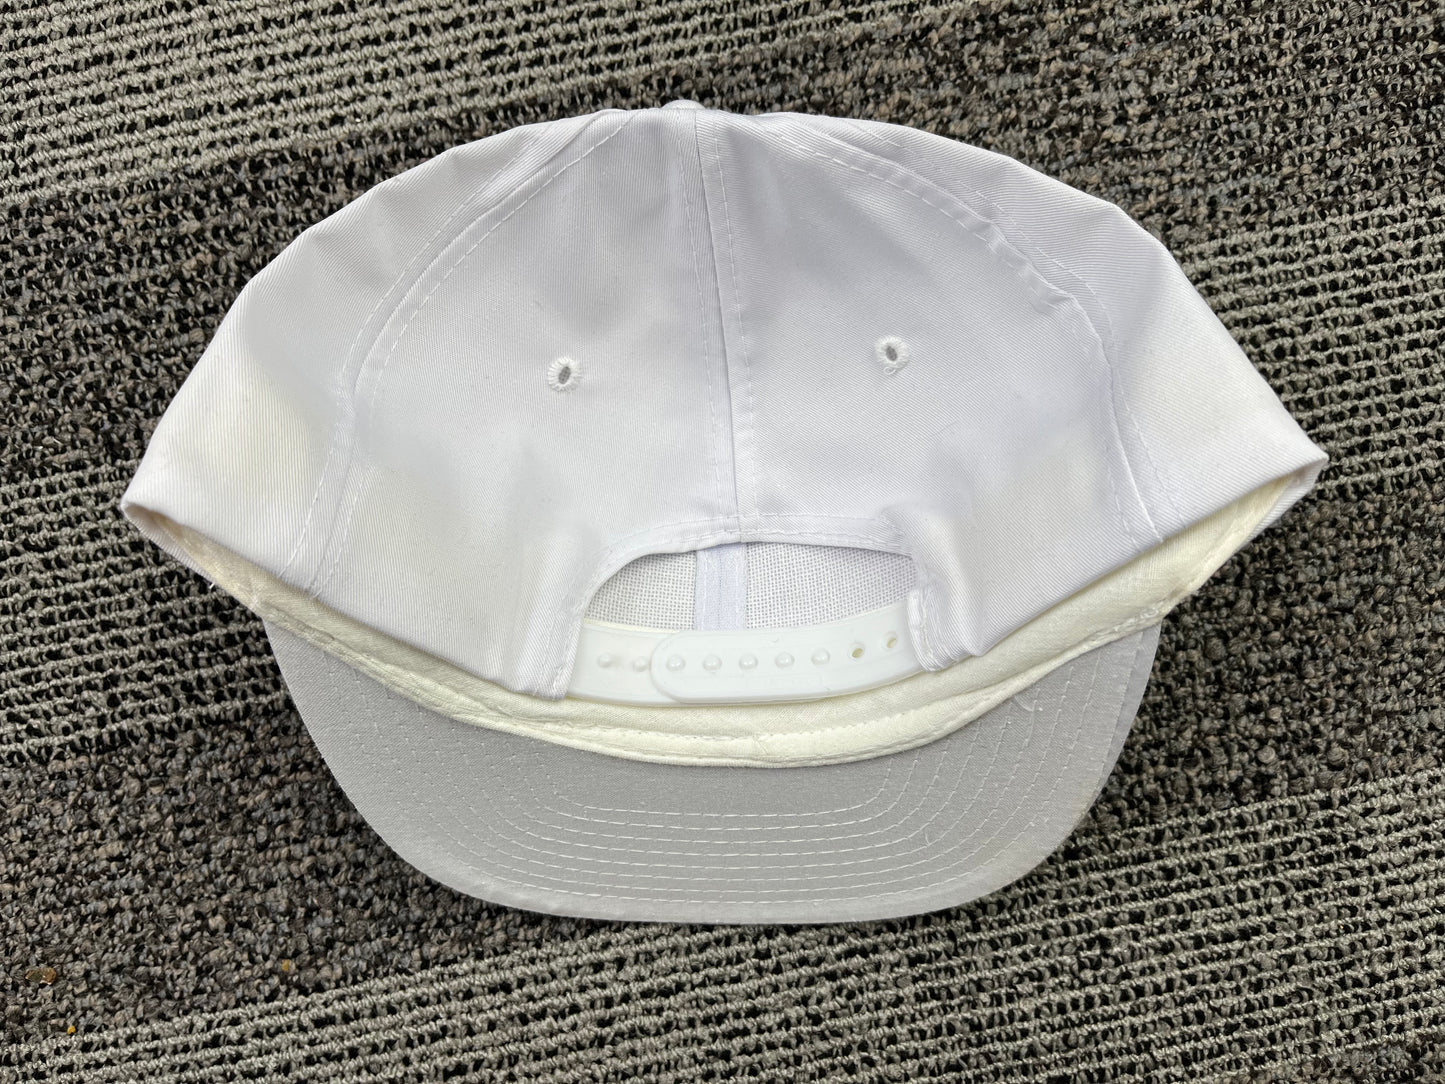 Michigan State Snapback Hat